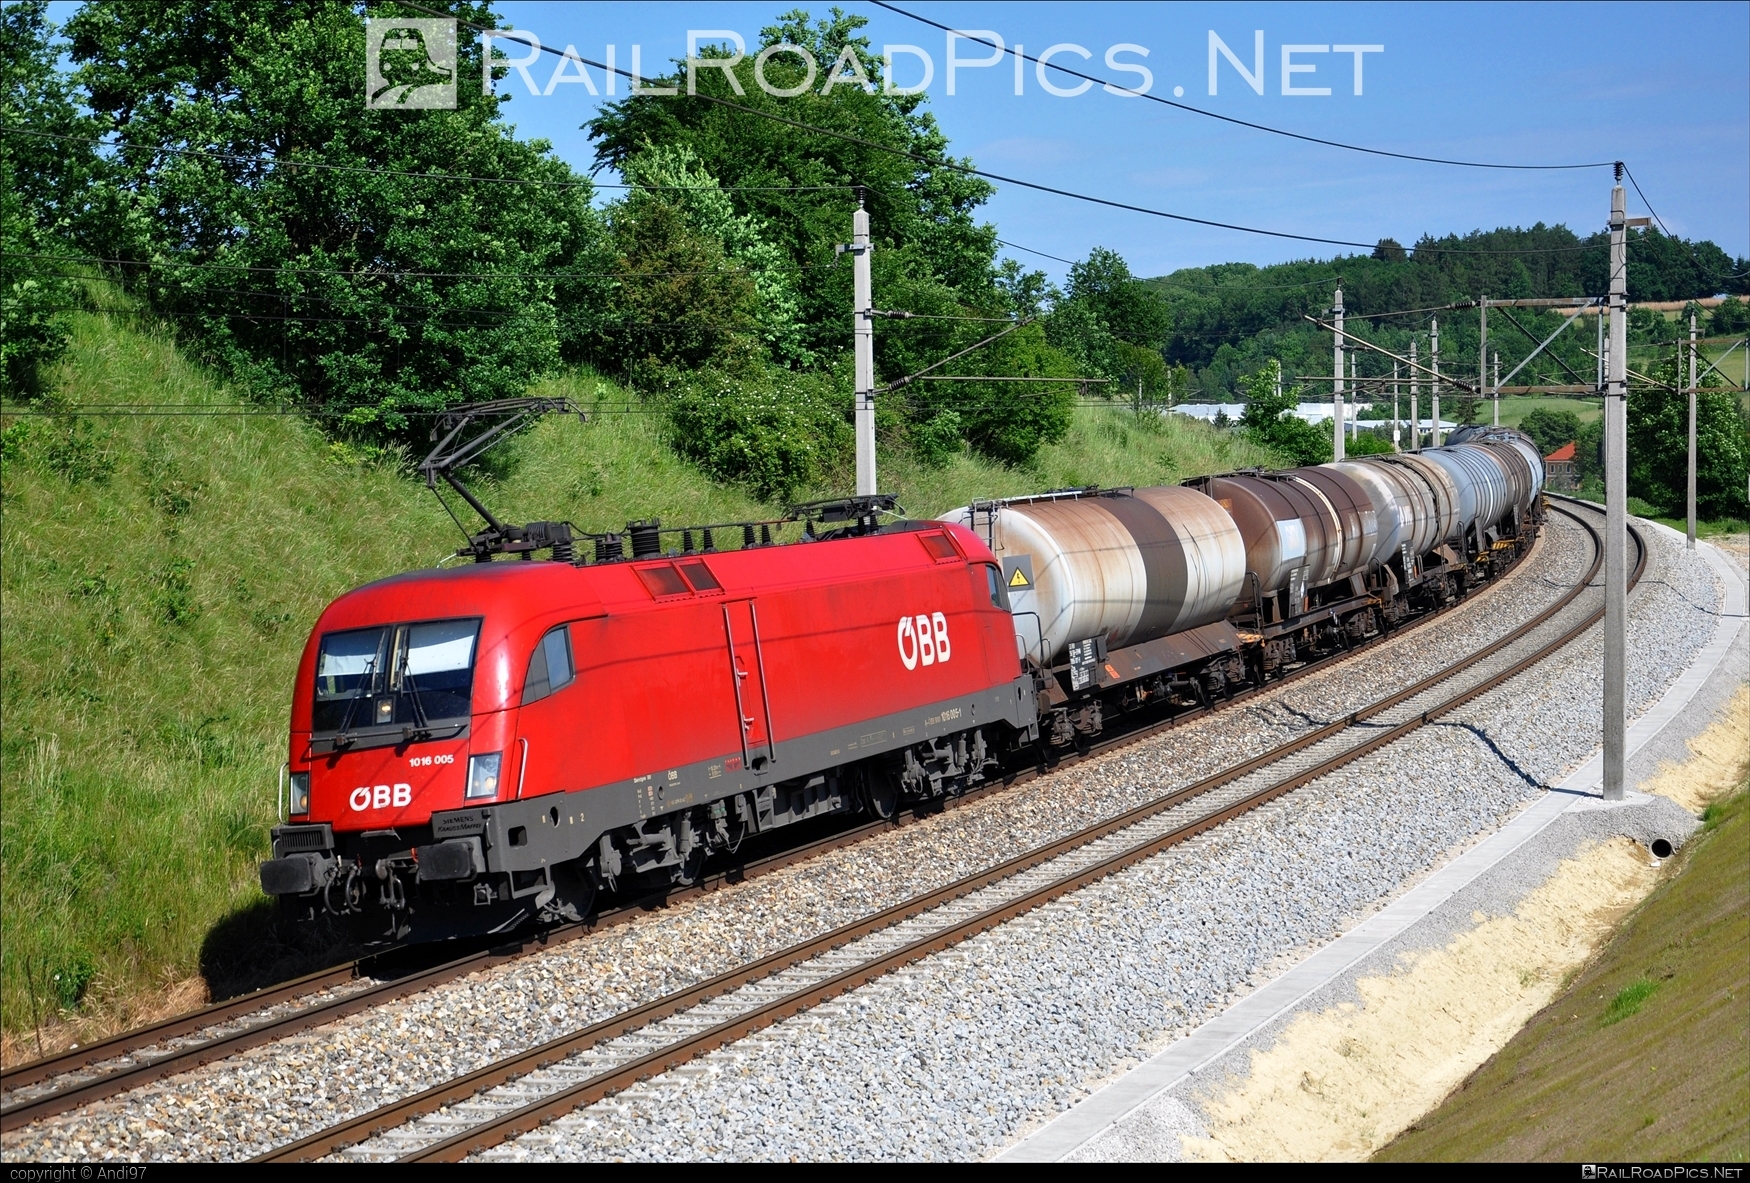 Siemens ES 64 U2 - 1016 005 operated by Rail Cargo Austria AG #es64 #es64u2 #eurosprinter #kesselwagen #obb #osterreichischebundesbahnen #rcw #siemens #siemensEs64 #siemensEs64u2 #siemenstaurus #tankwagon #taurus #tauruslocomotive